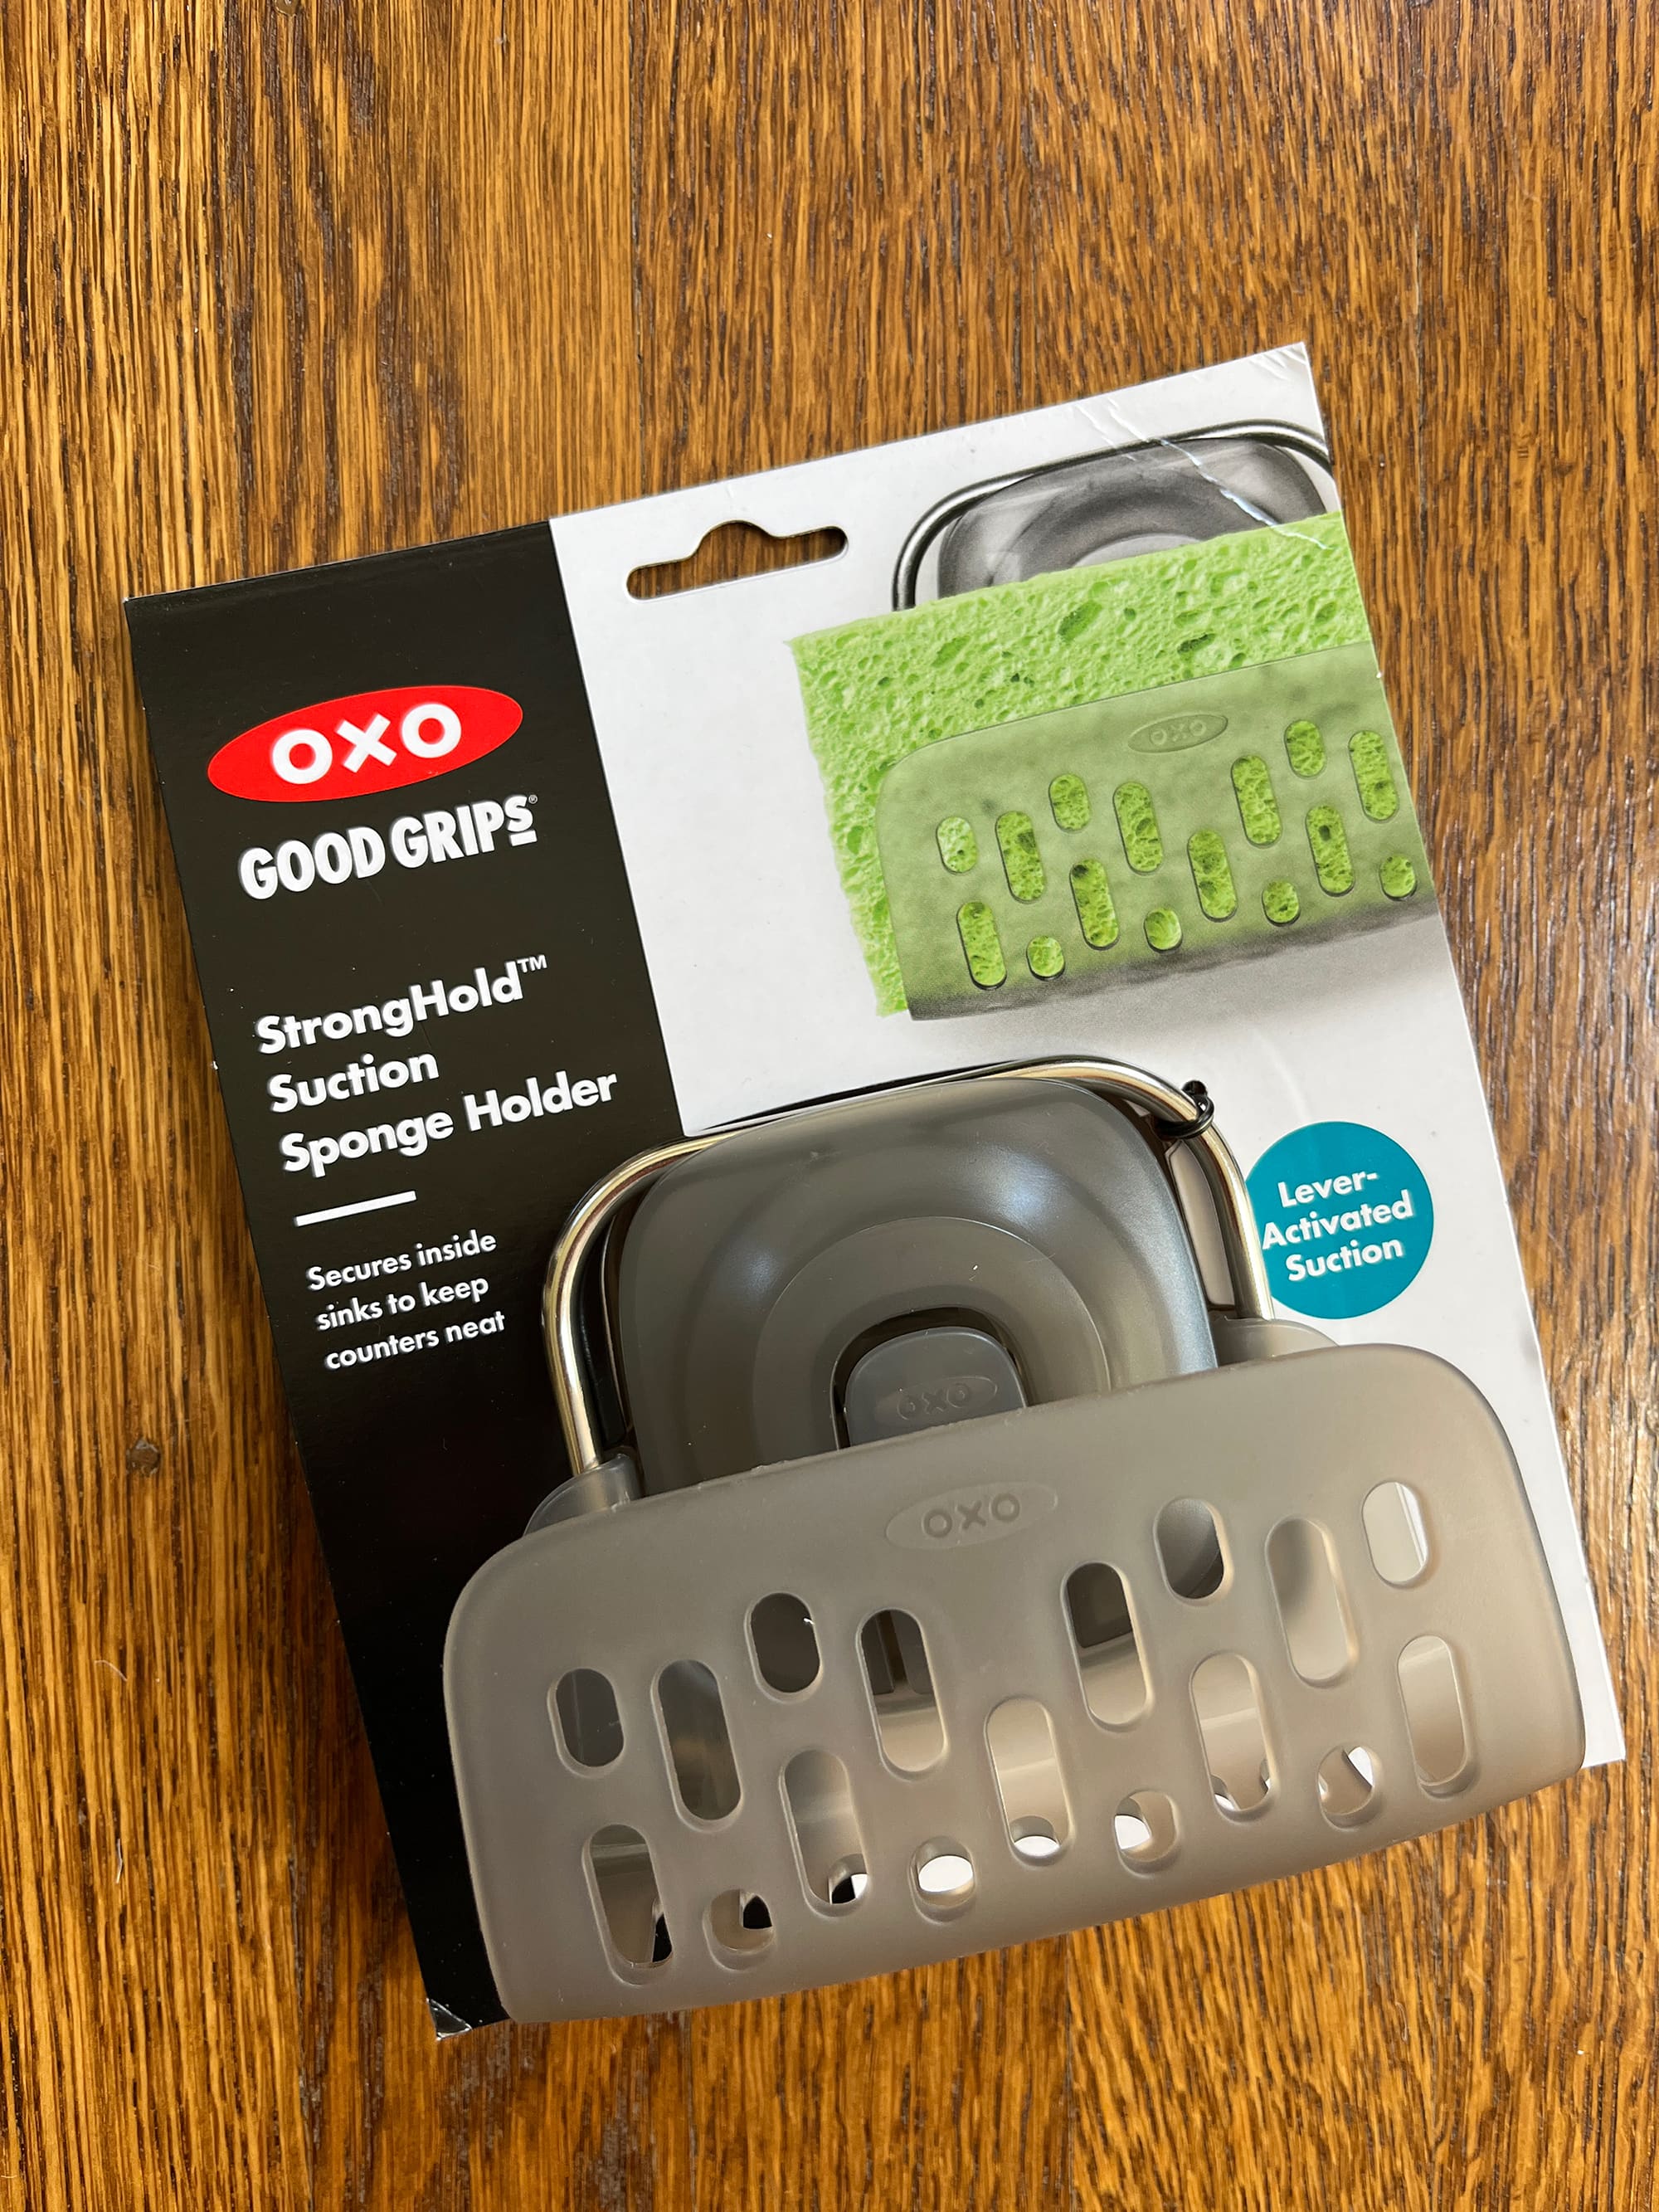 OXO Good Grips Stronghold Suction Sponge Holder (Tested)